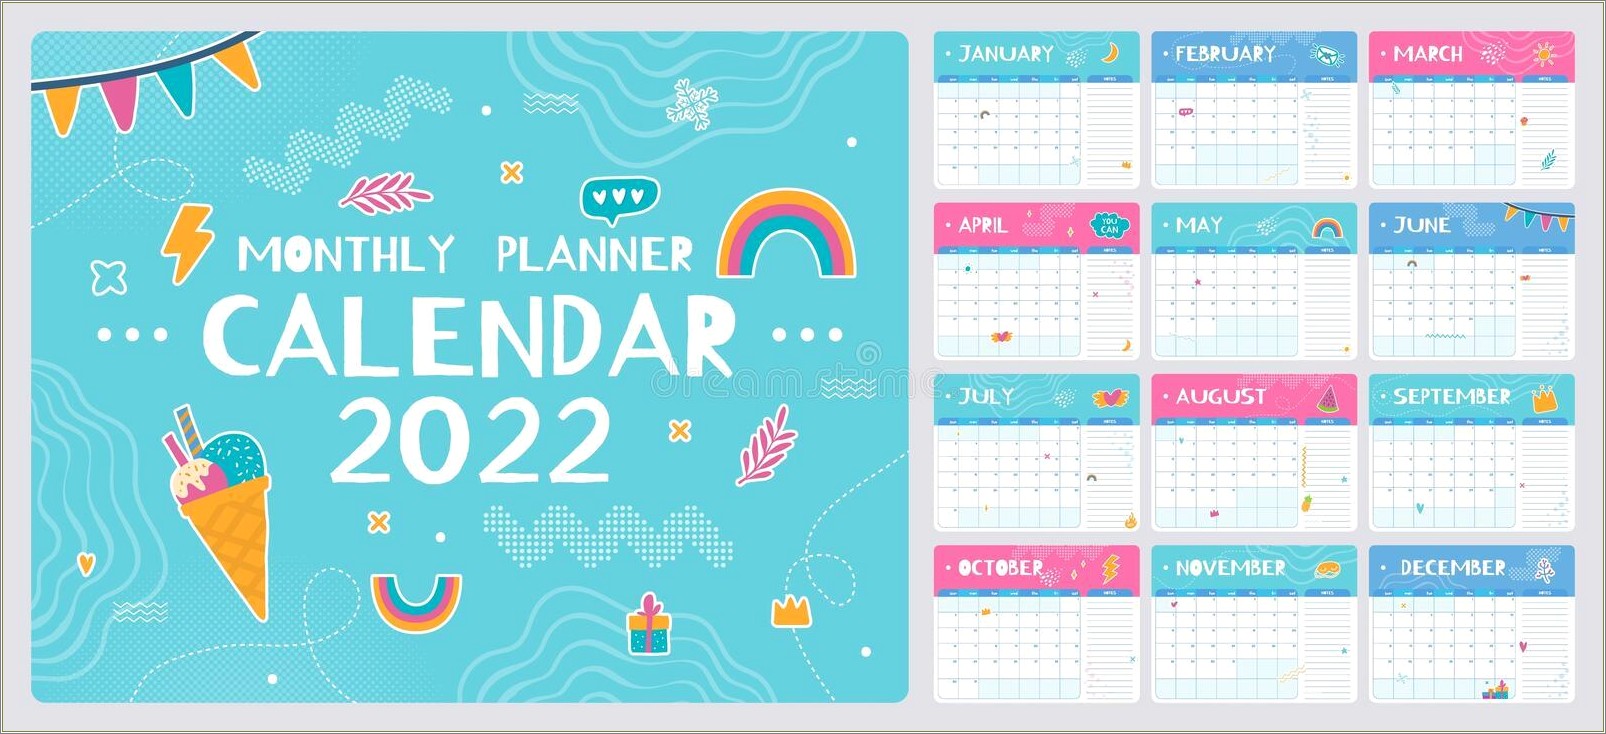 Free Monthly Calendar Template For Preschool